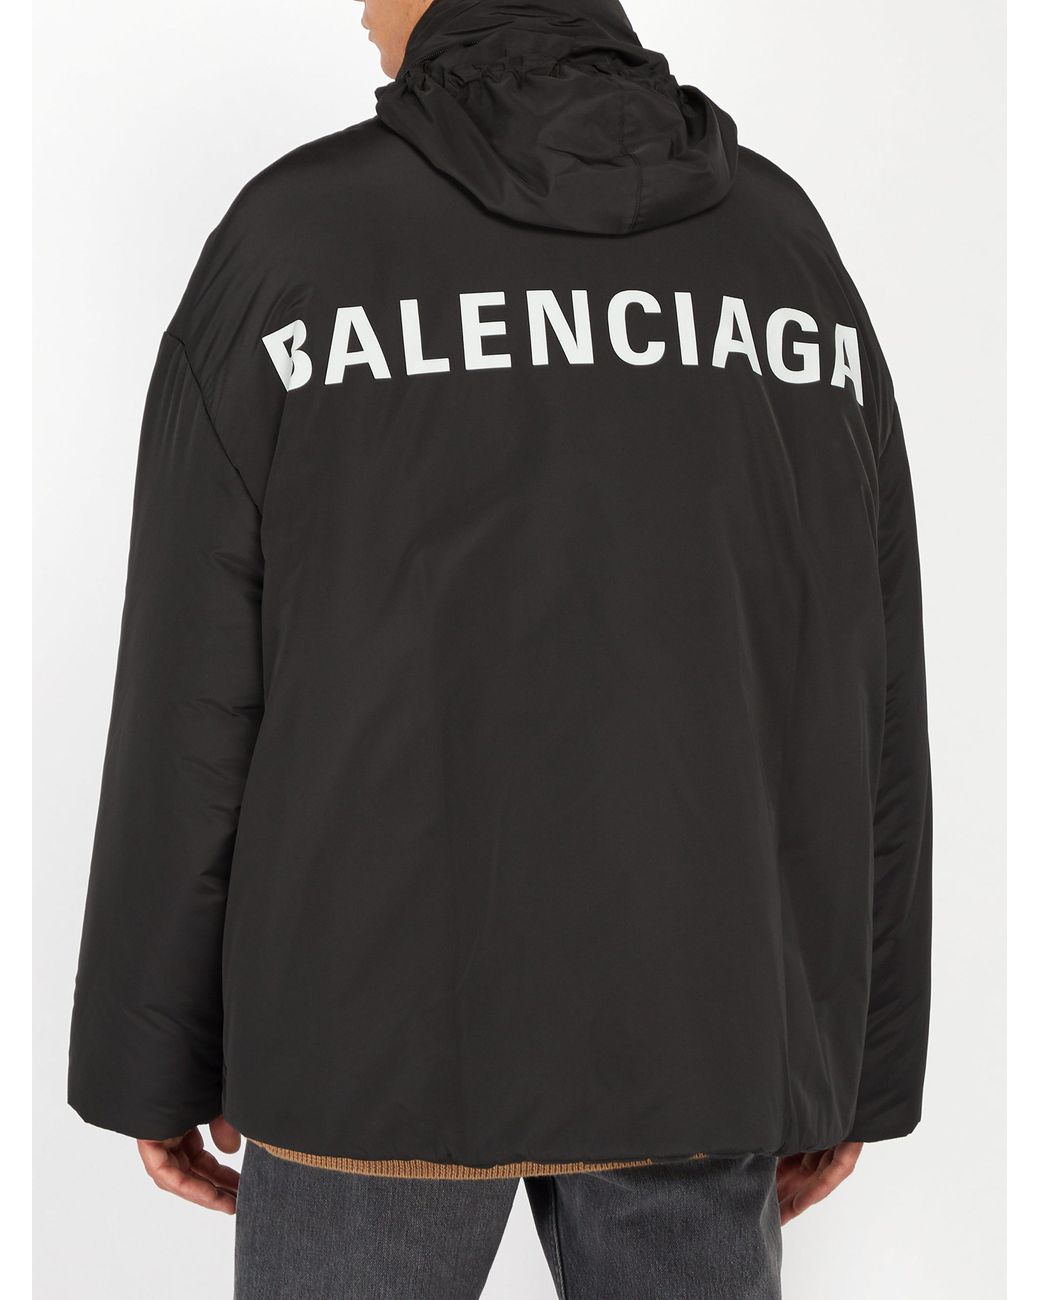 Balenciaga Logo Windbreaker Jacket in Black for Men | Lyst Australia